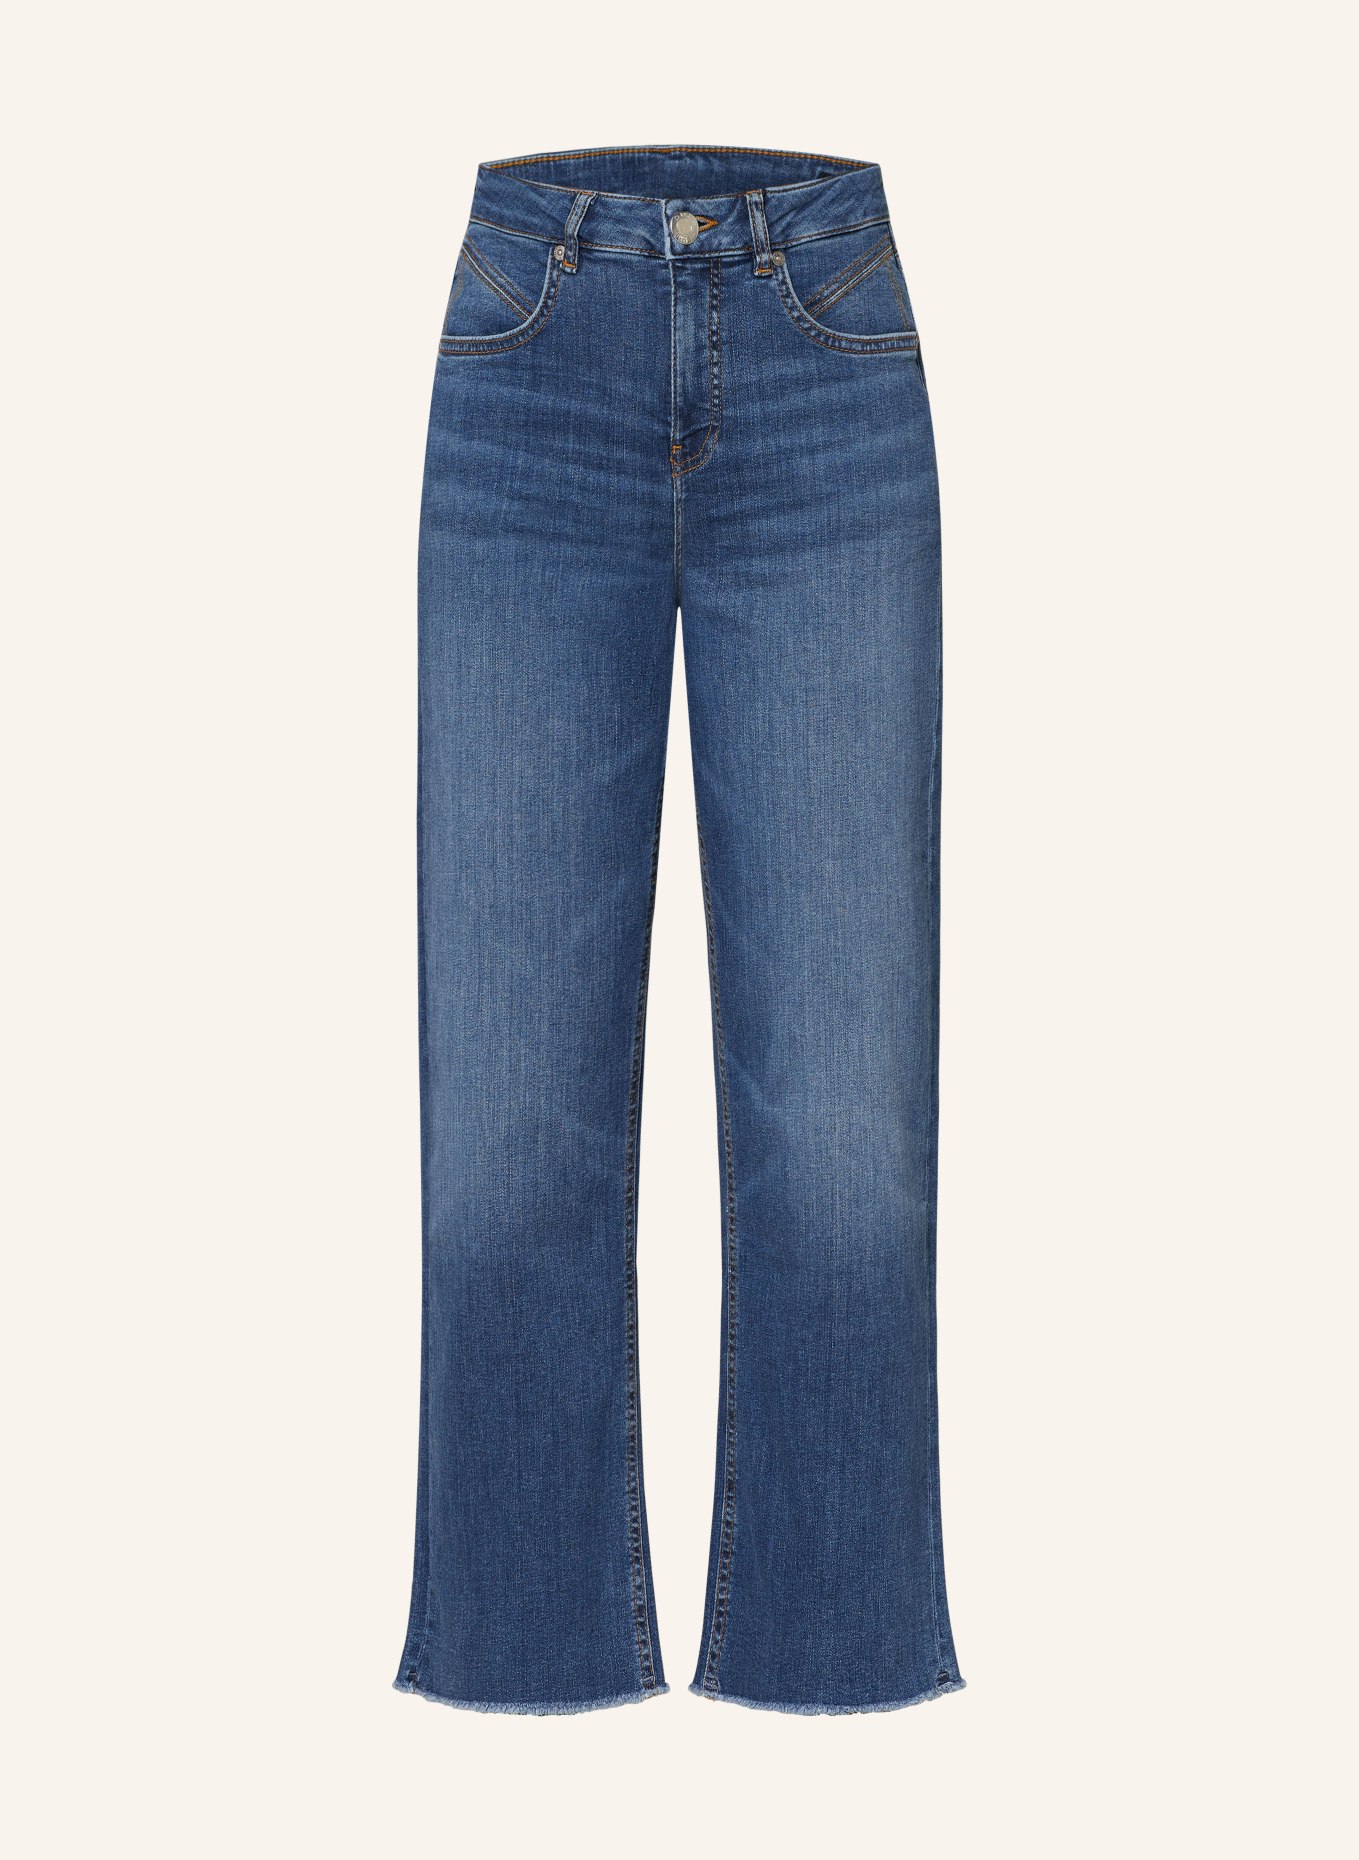 OPUS 7/8-Jeans MOMITO, Farbe: 70129 fresh up blue (Bild 1)